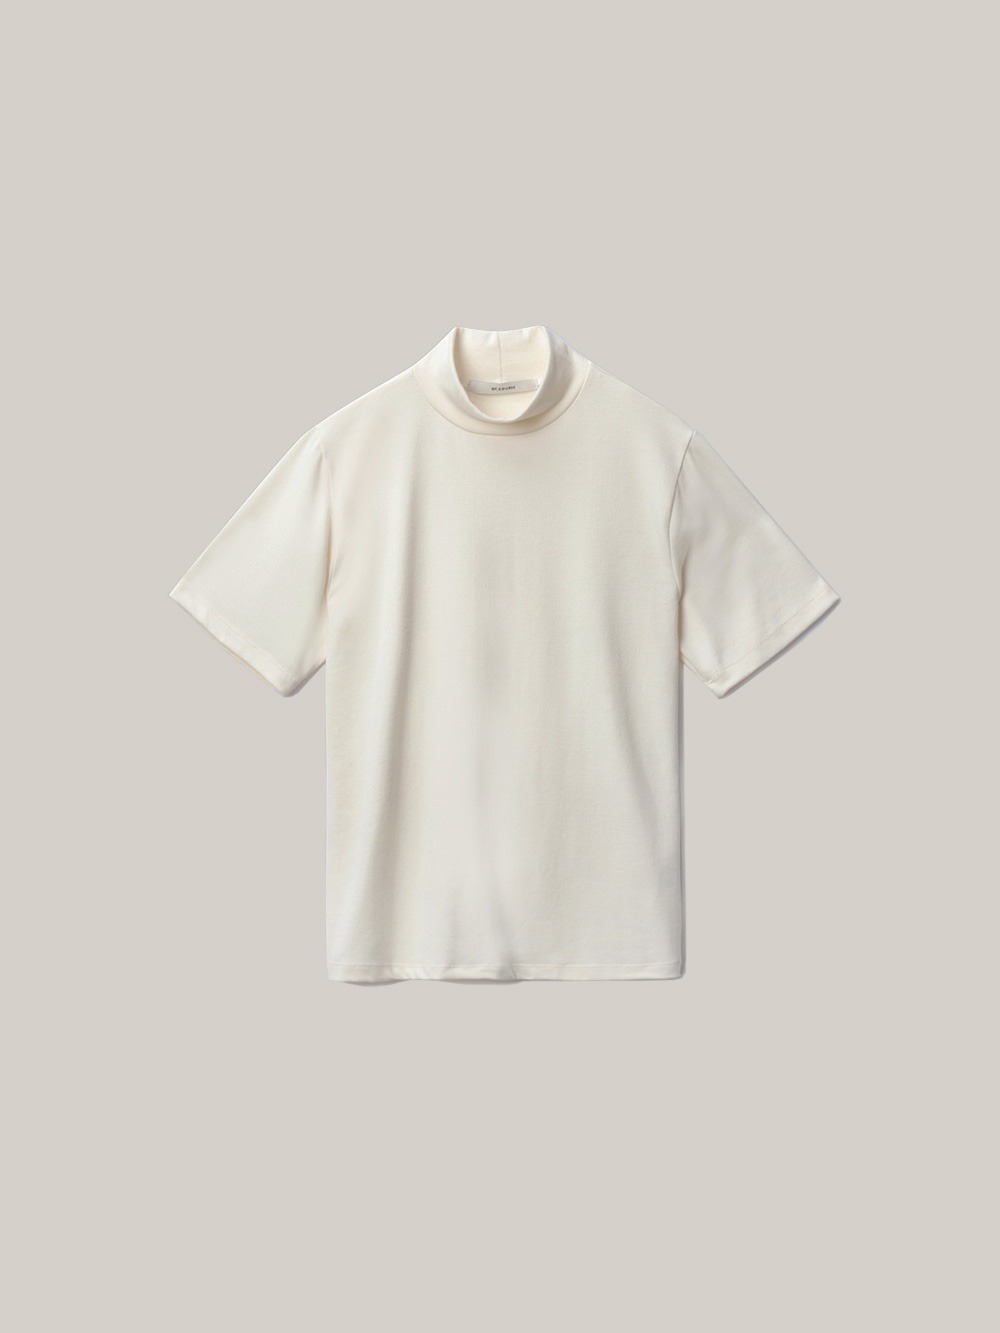 Half Neck T-shirt (cream)